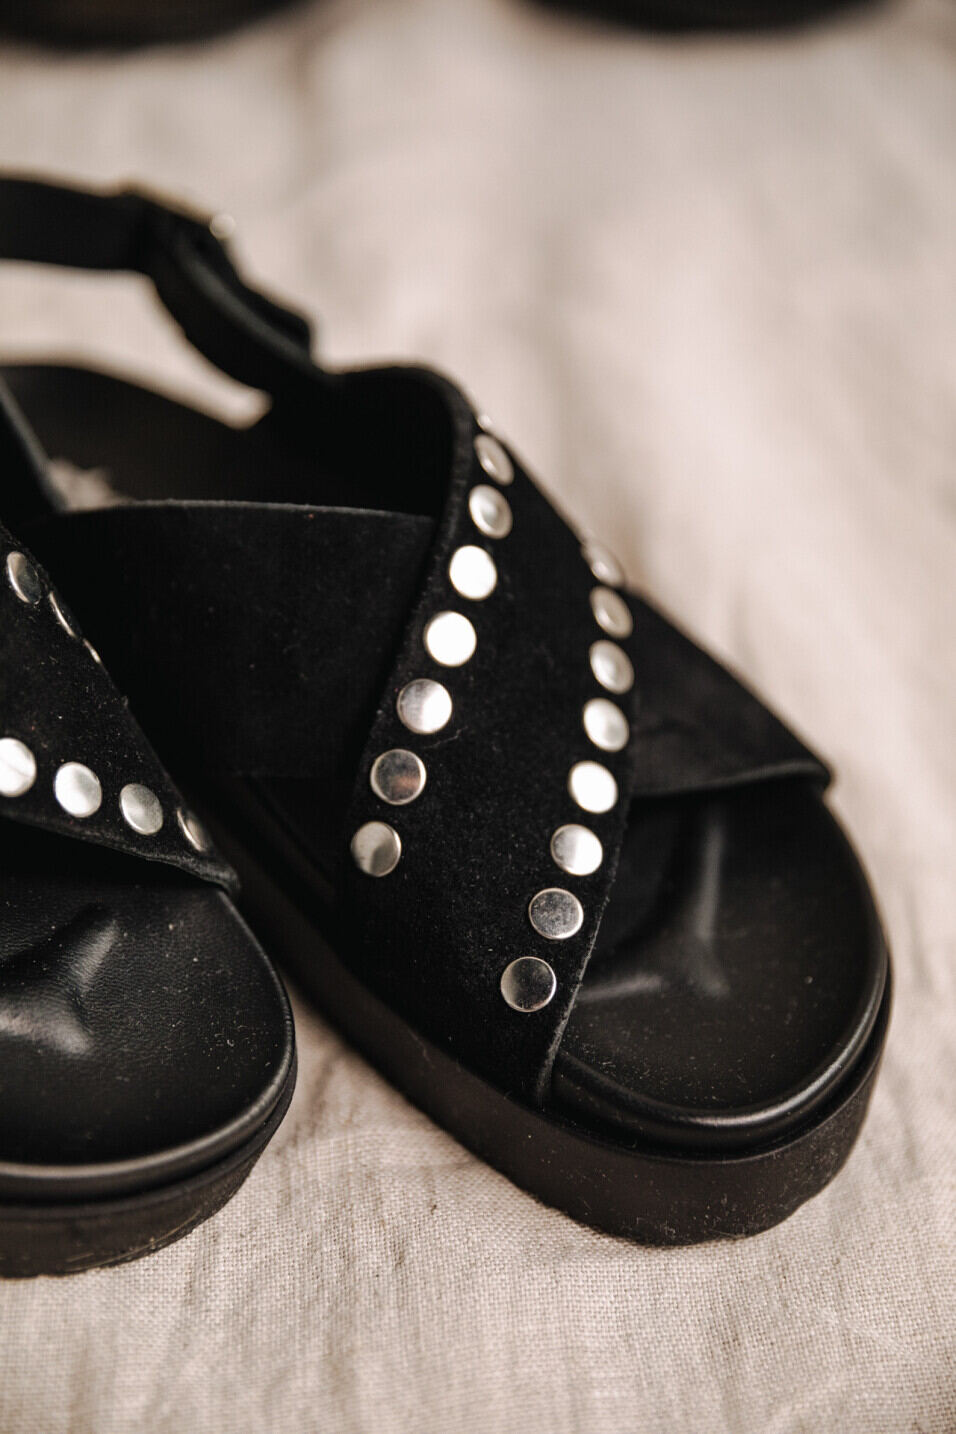 Leather sandals Woman Jule Black | Freeman T. Porter